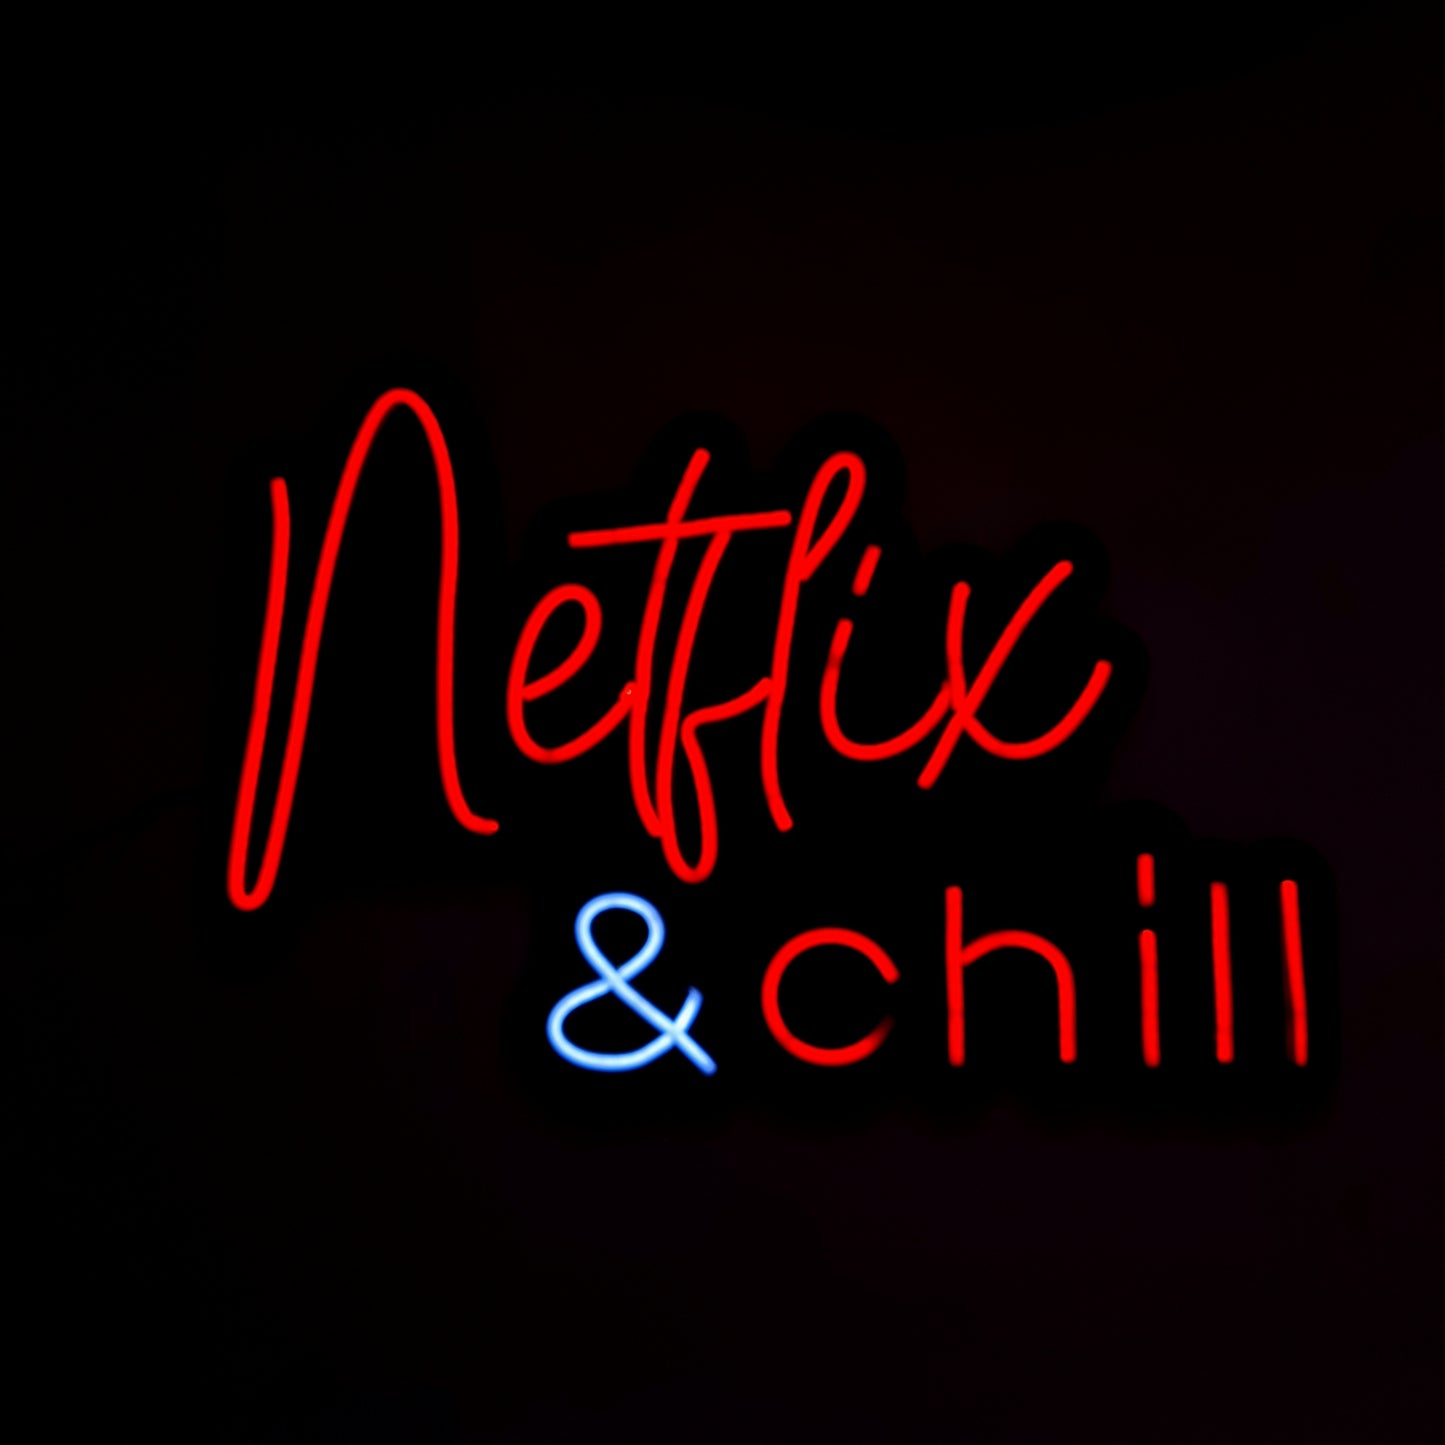 Netflix & Chill Neon Sign